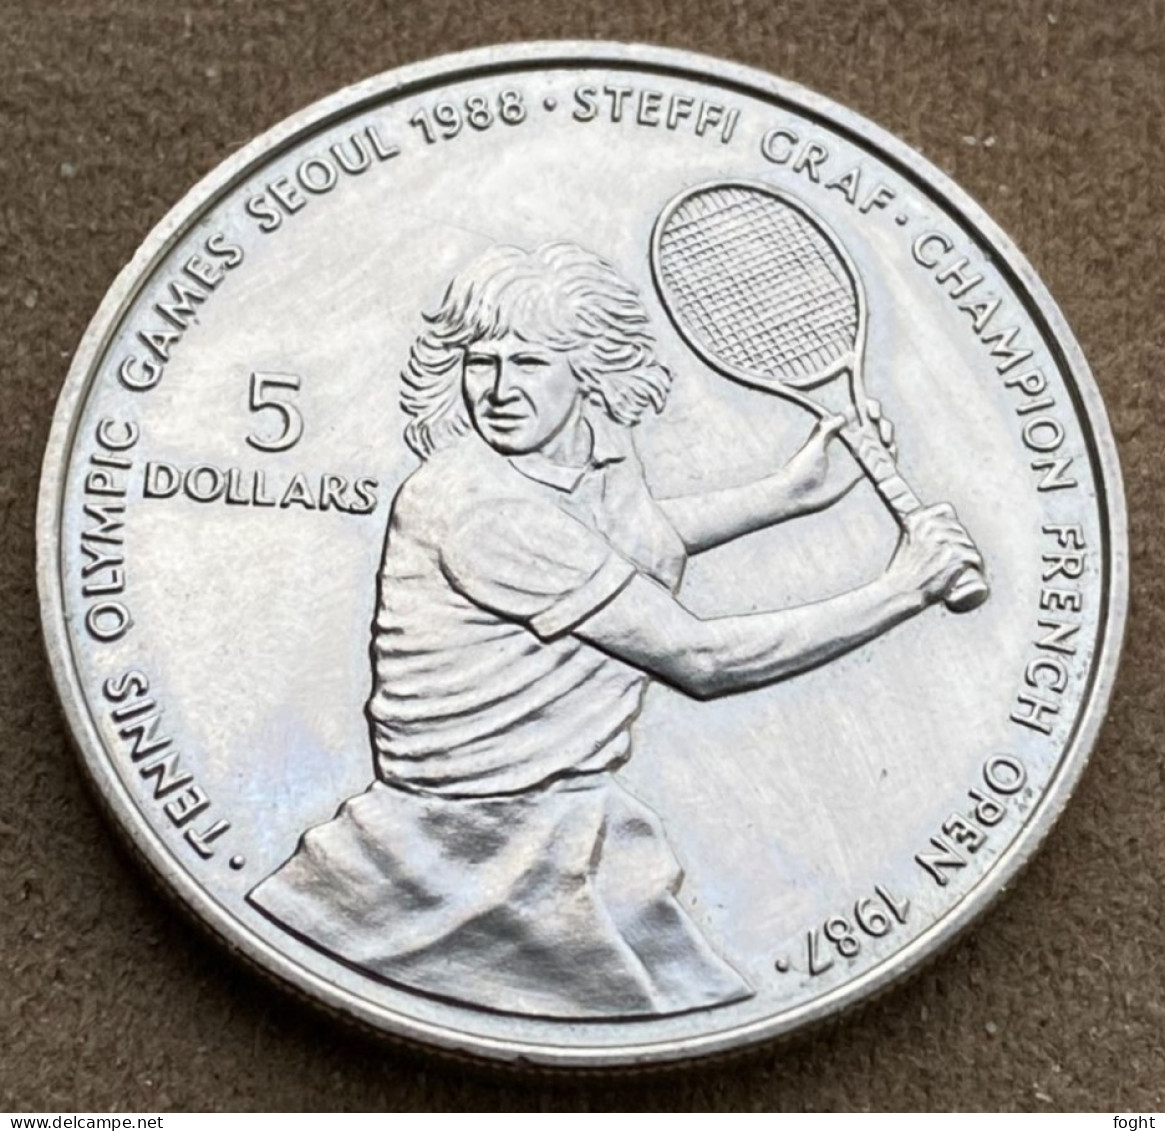 1987 Niue Commemorative Coin Steffi Graf 5 Dollars,KM#5,3710 - Niue